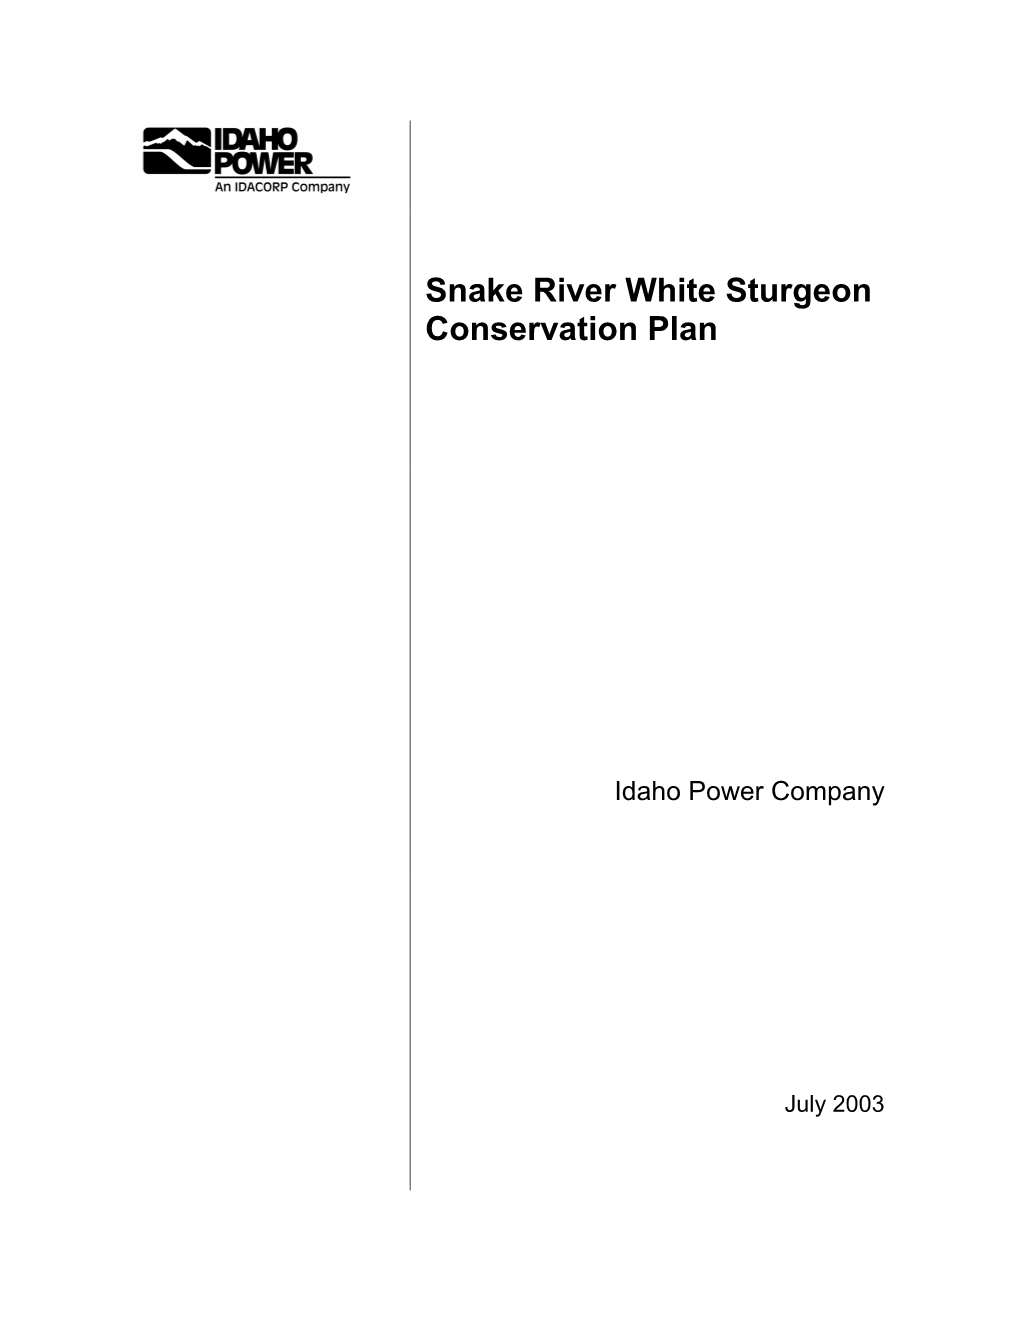 Snake River White Sturgeon Conservation Plan